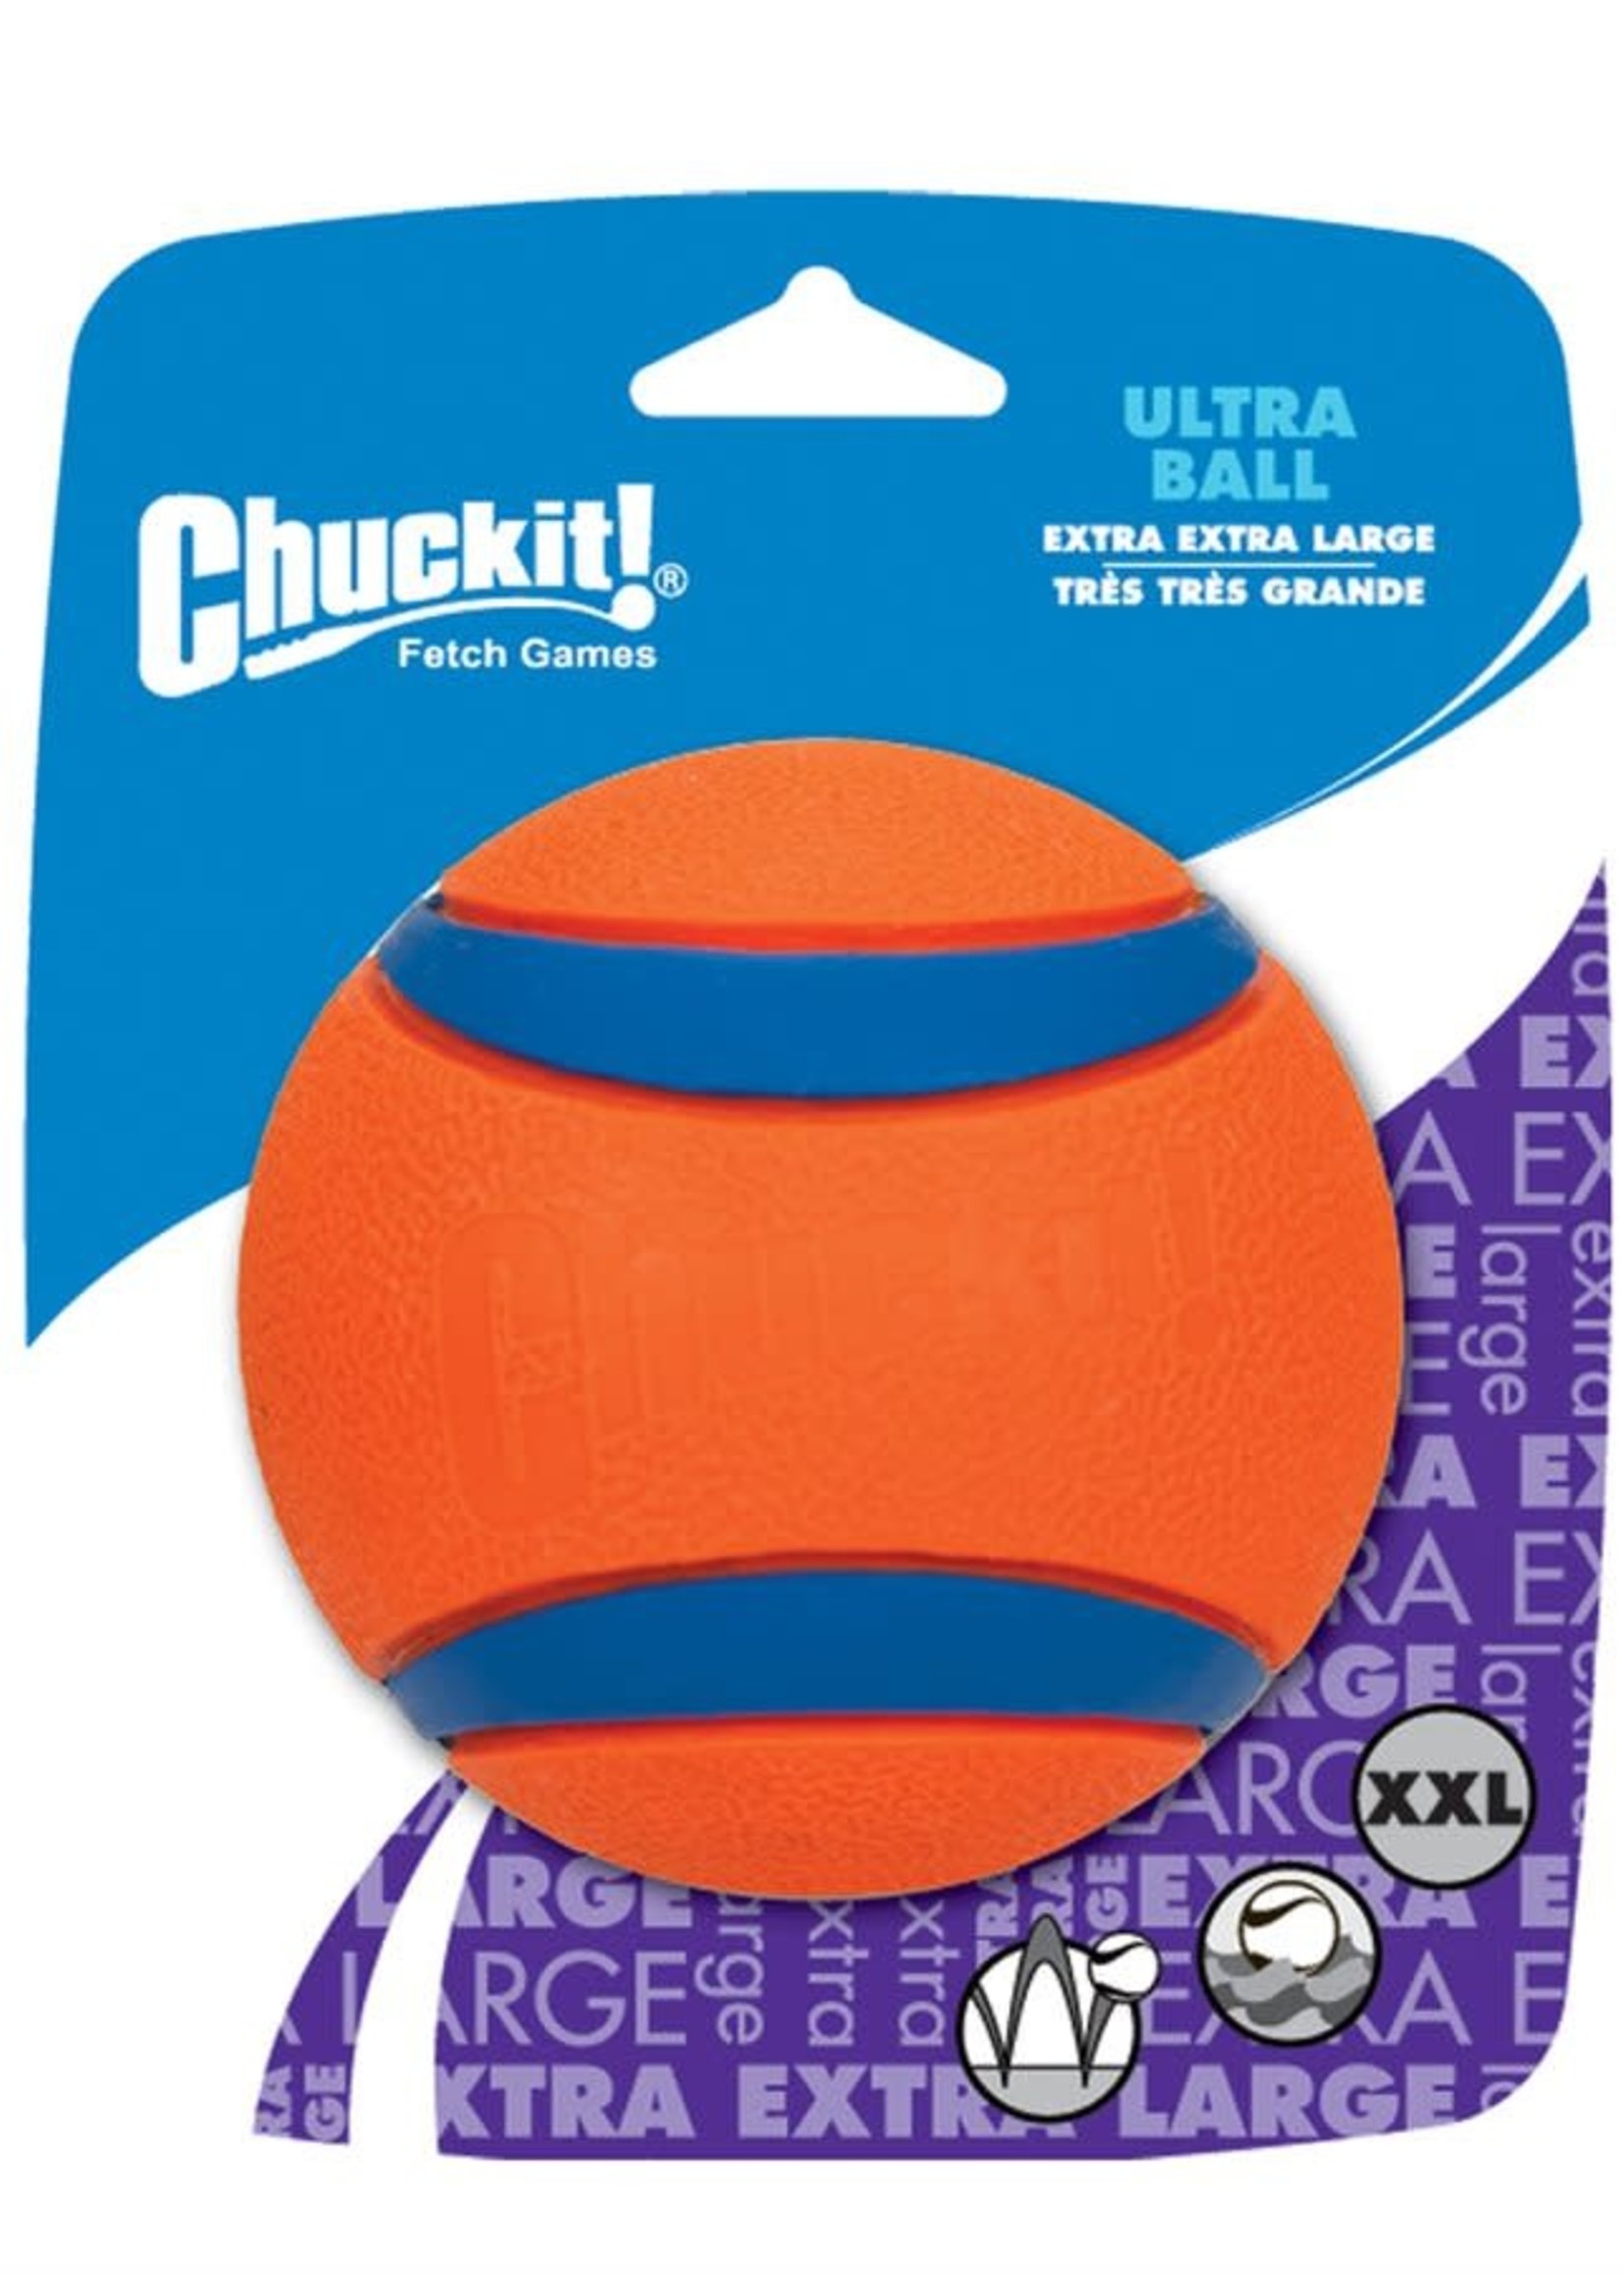 Chuckit!® Chuckit Ultra Ball Extra Extra Large